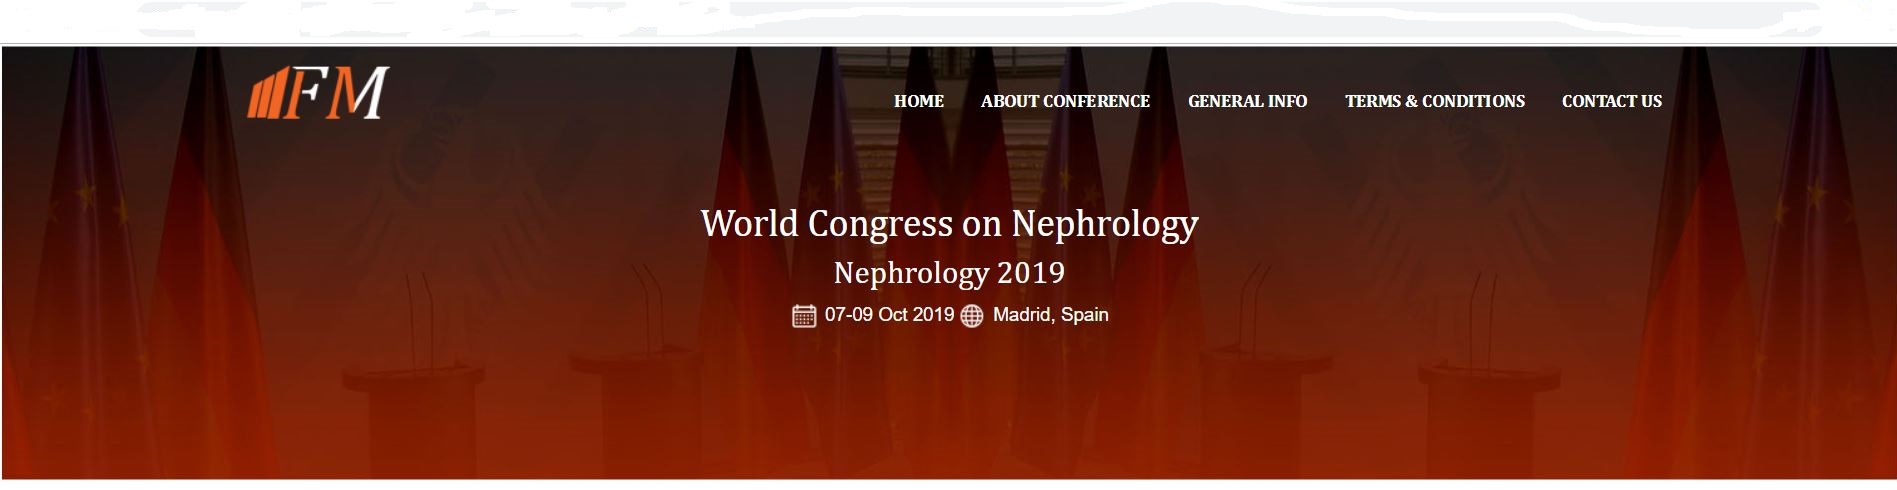 World Congress on Nephrology, Madrid, Comunidad de Madrid, Spain